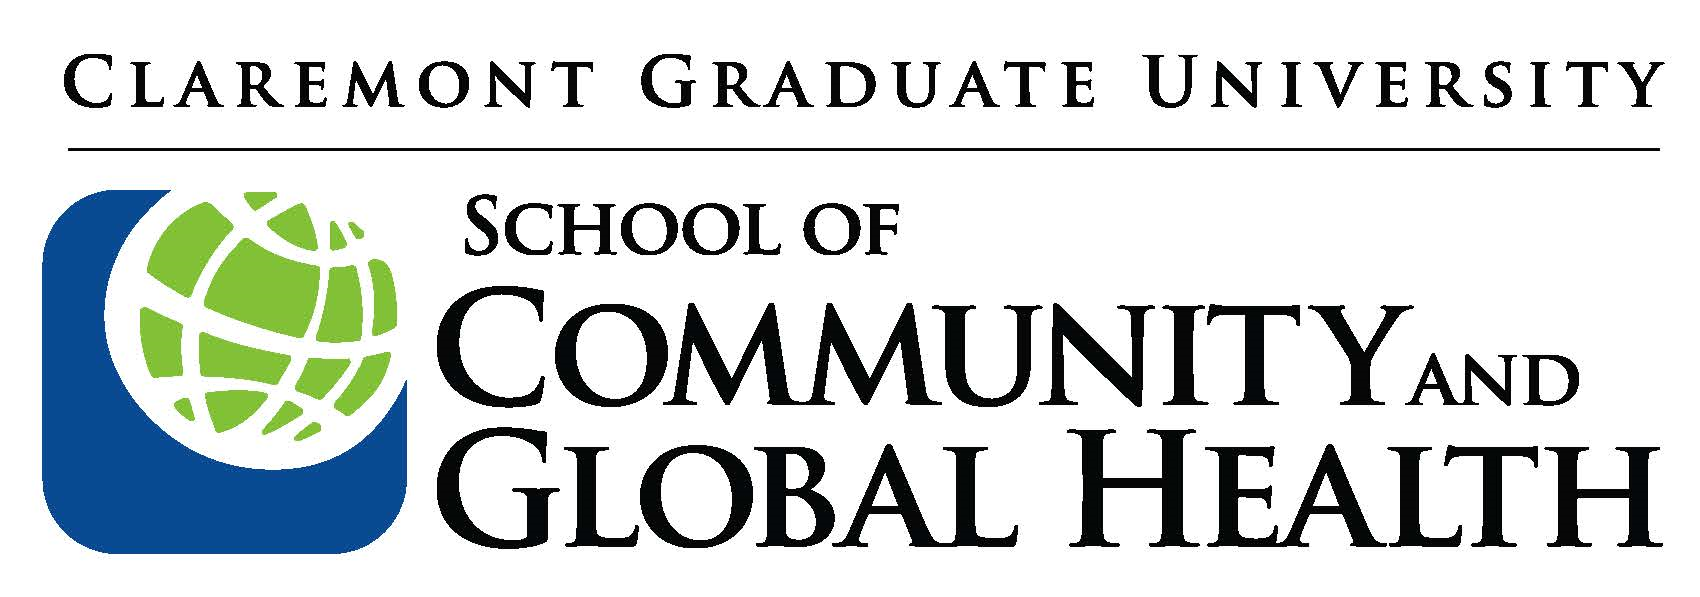 School of Community and Global Health, CGU